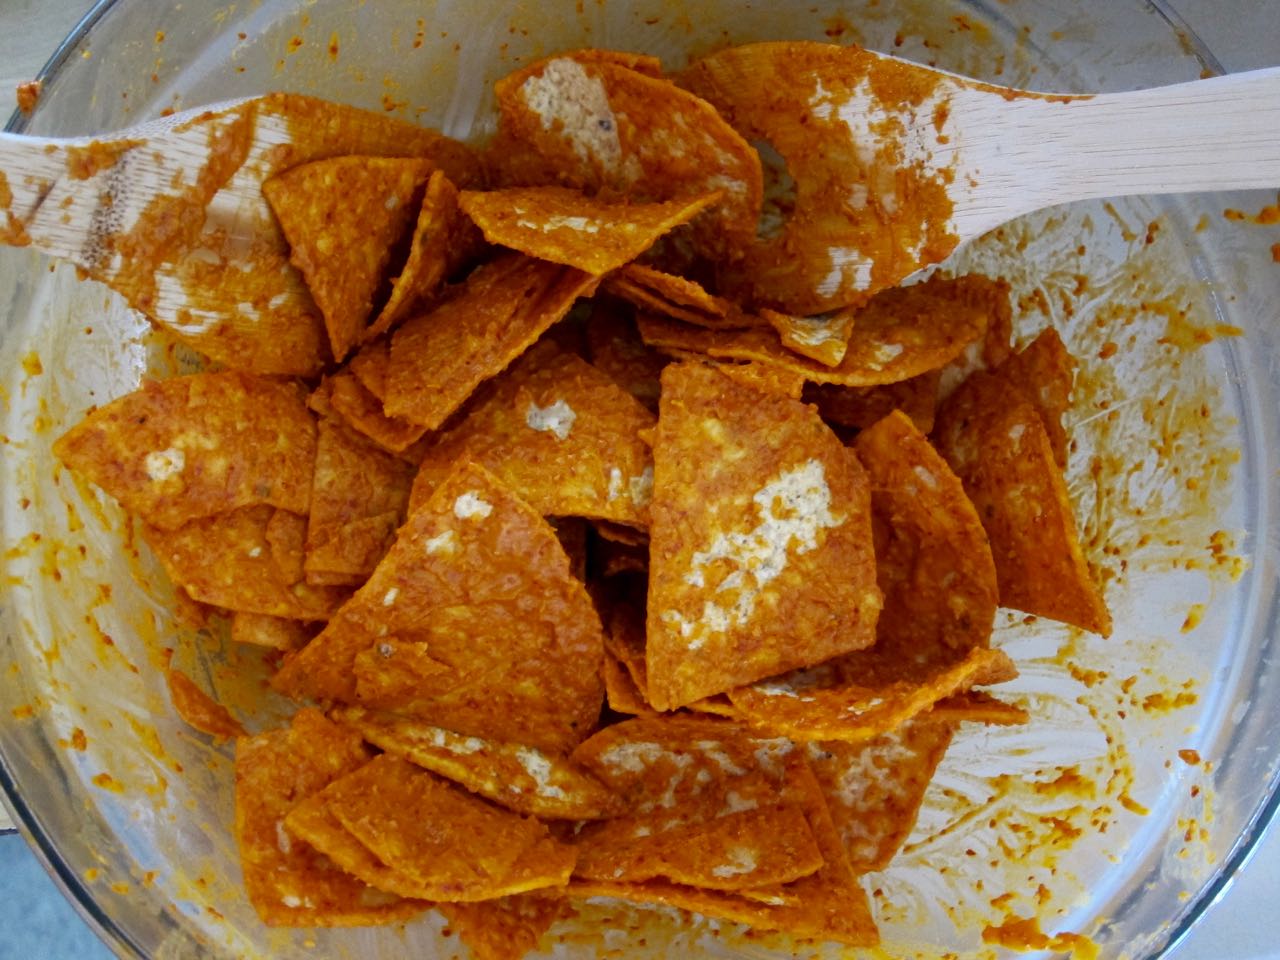 tortilla chips tossed in salsa de arbol.jpg